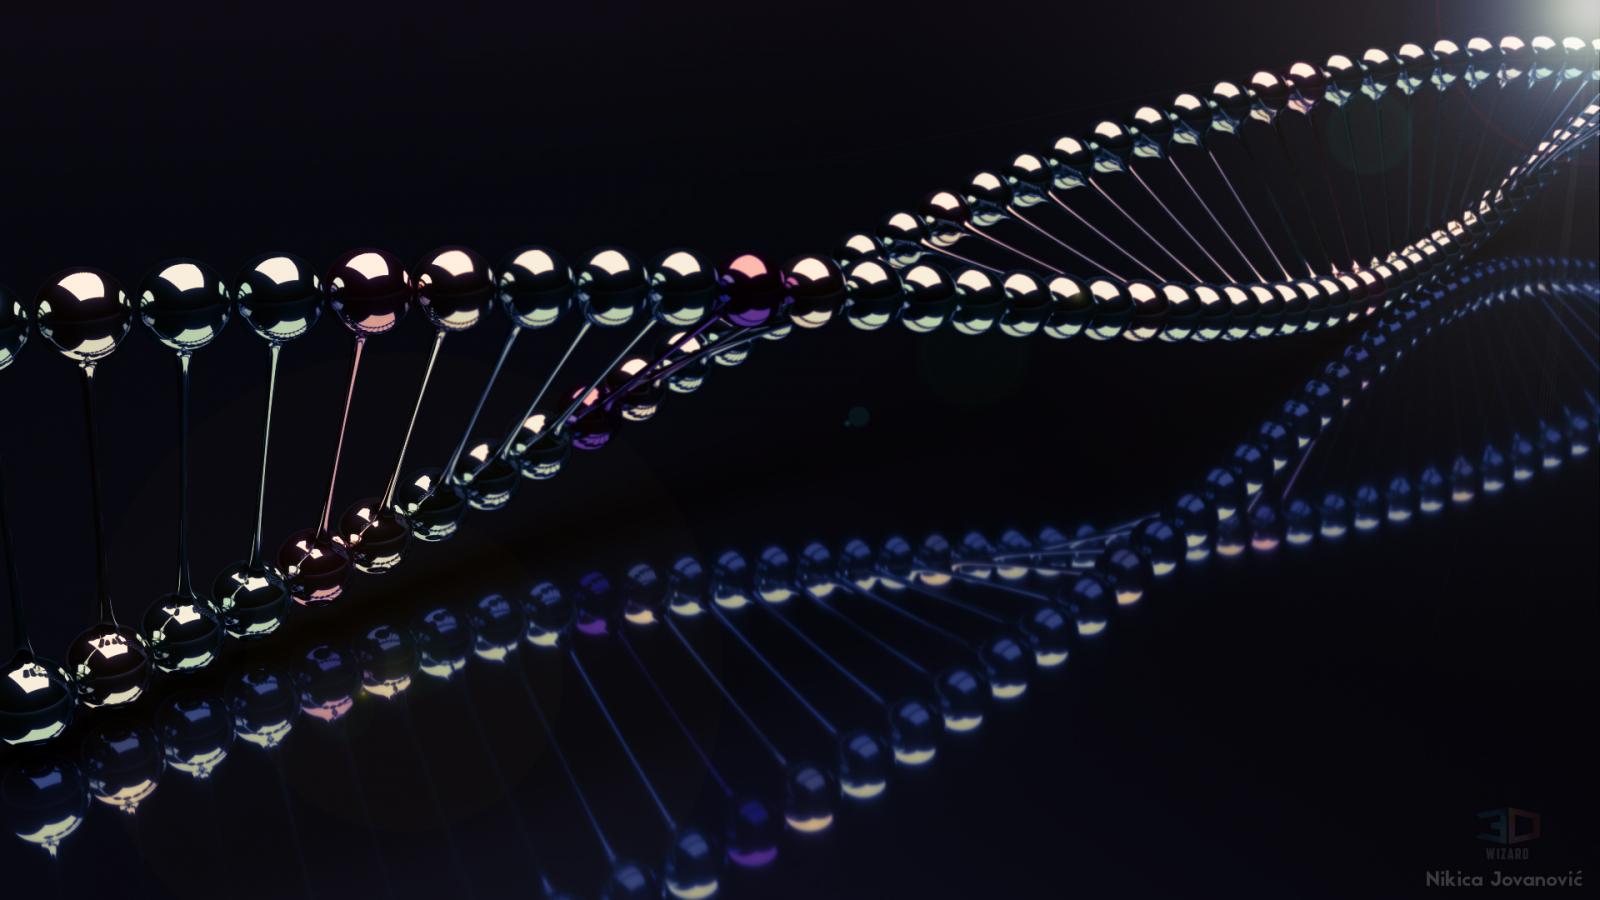 DNA diagram